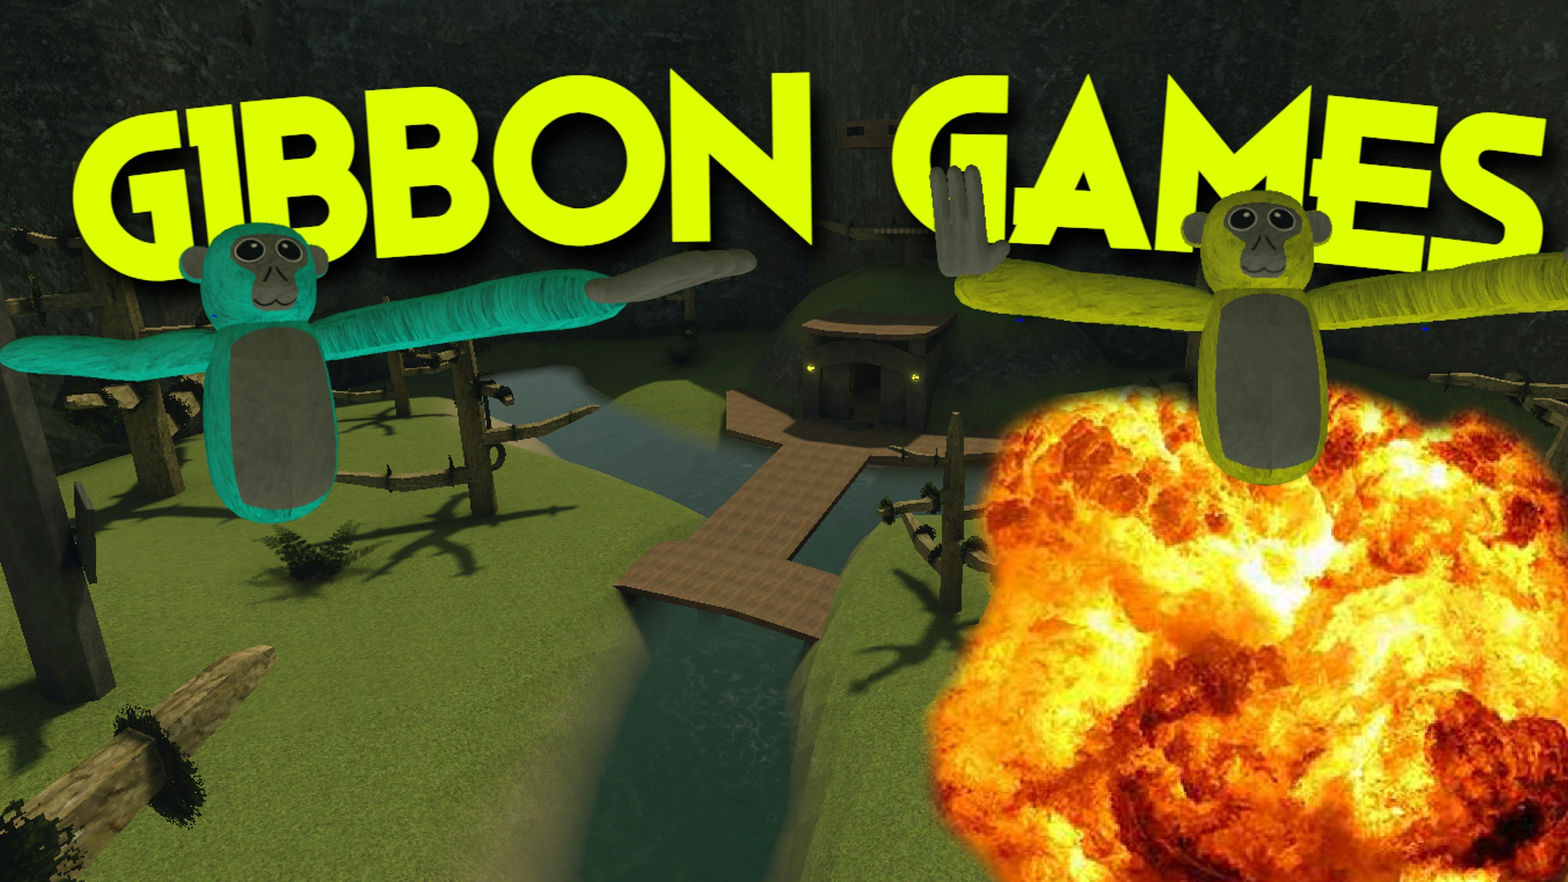 gibbon games